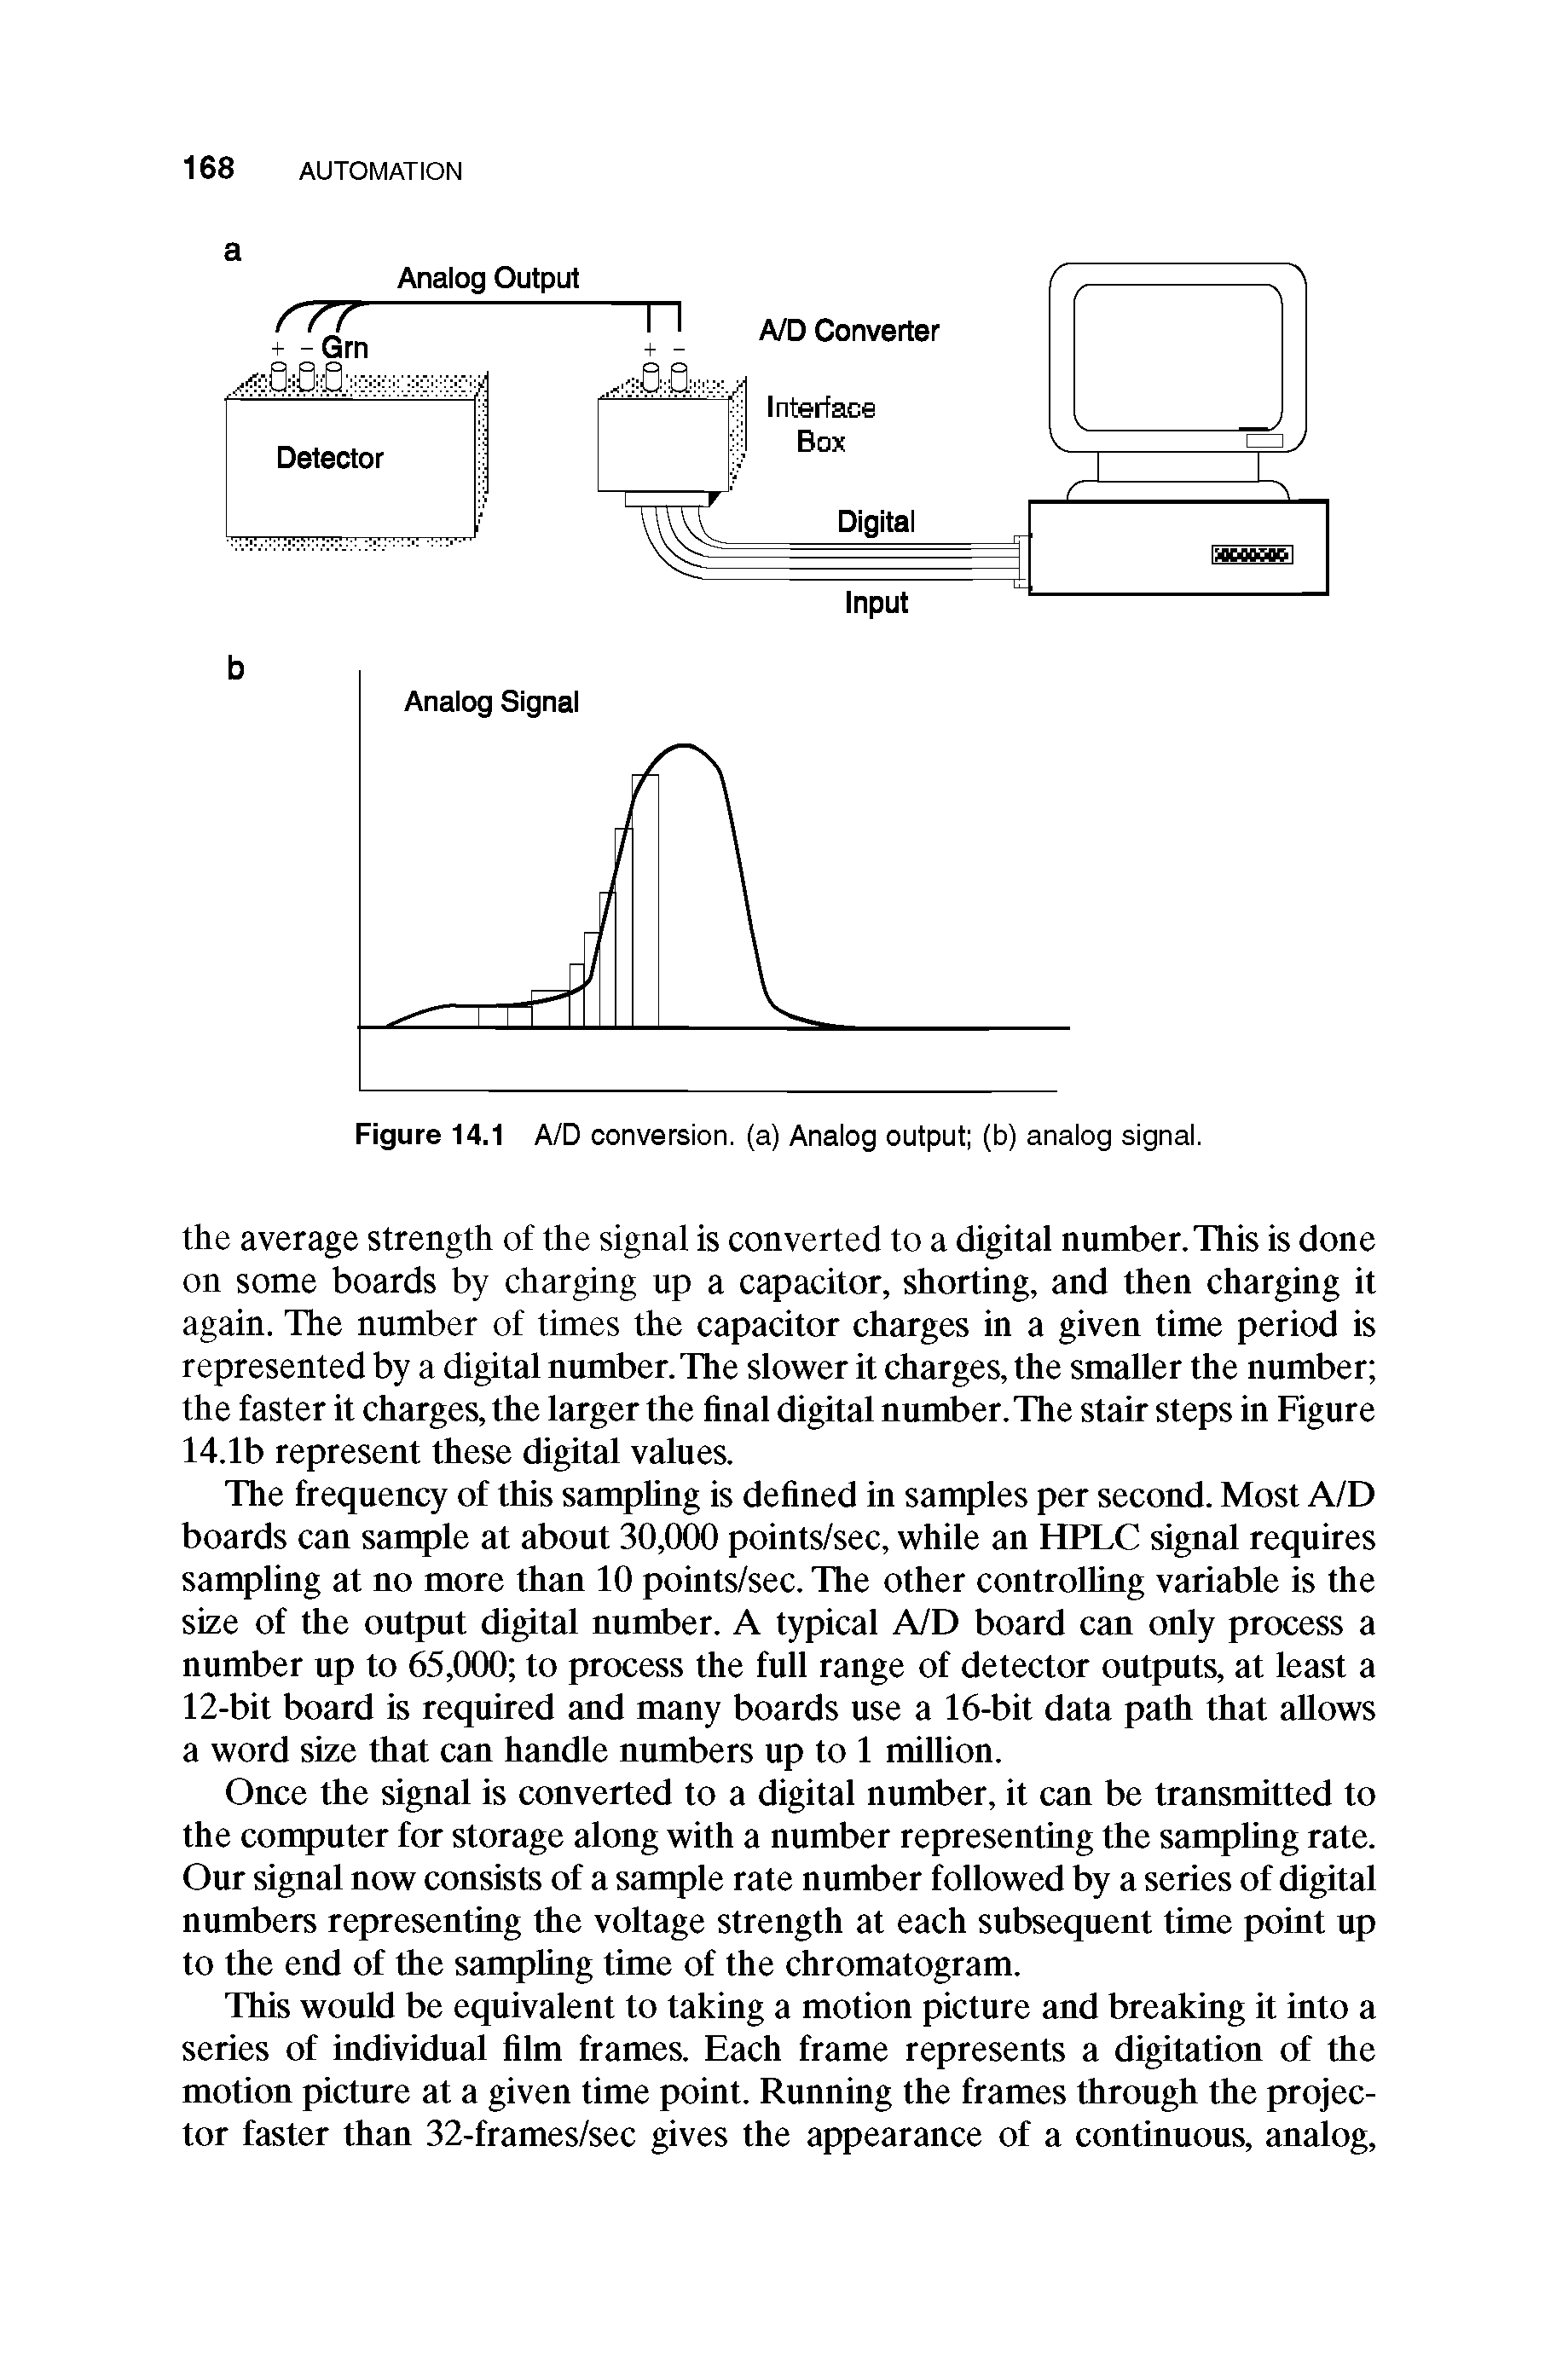 Figure 14.1 A/D conversion, (a) Analog output (b) analog signal.